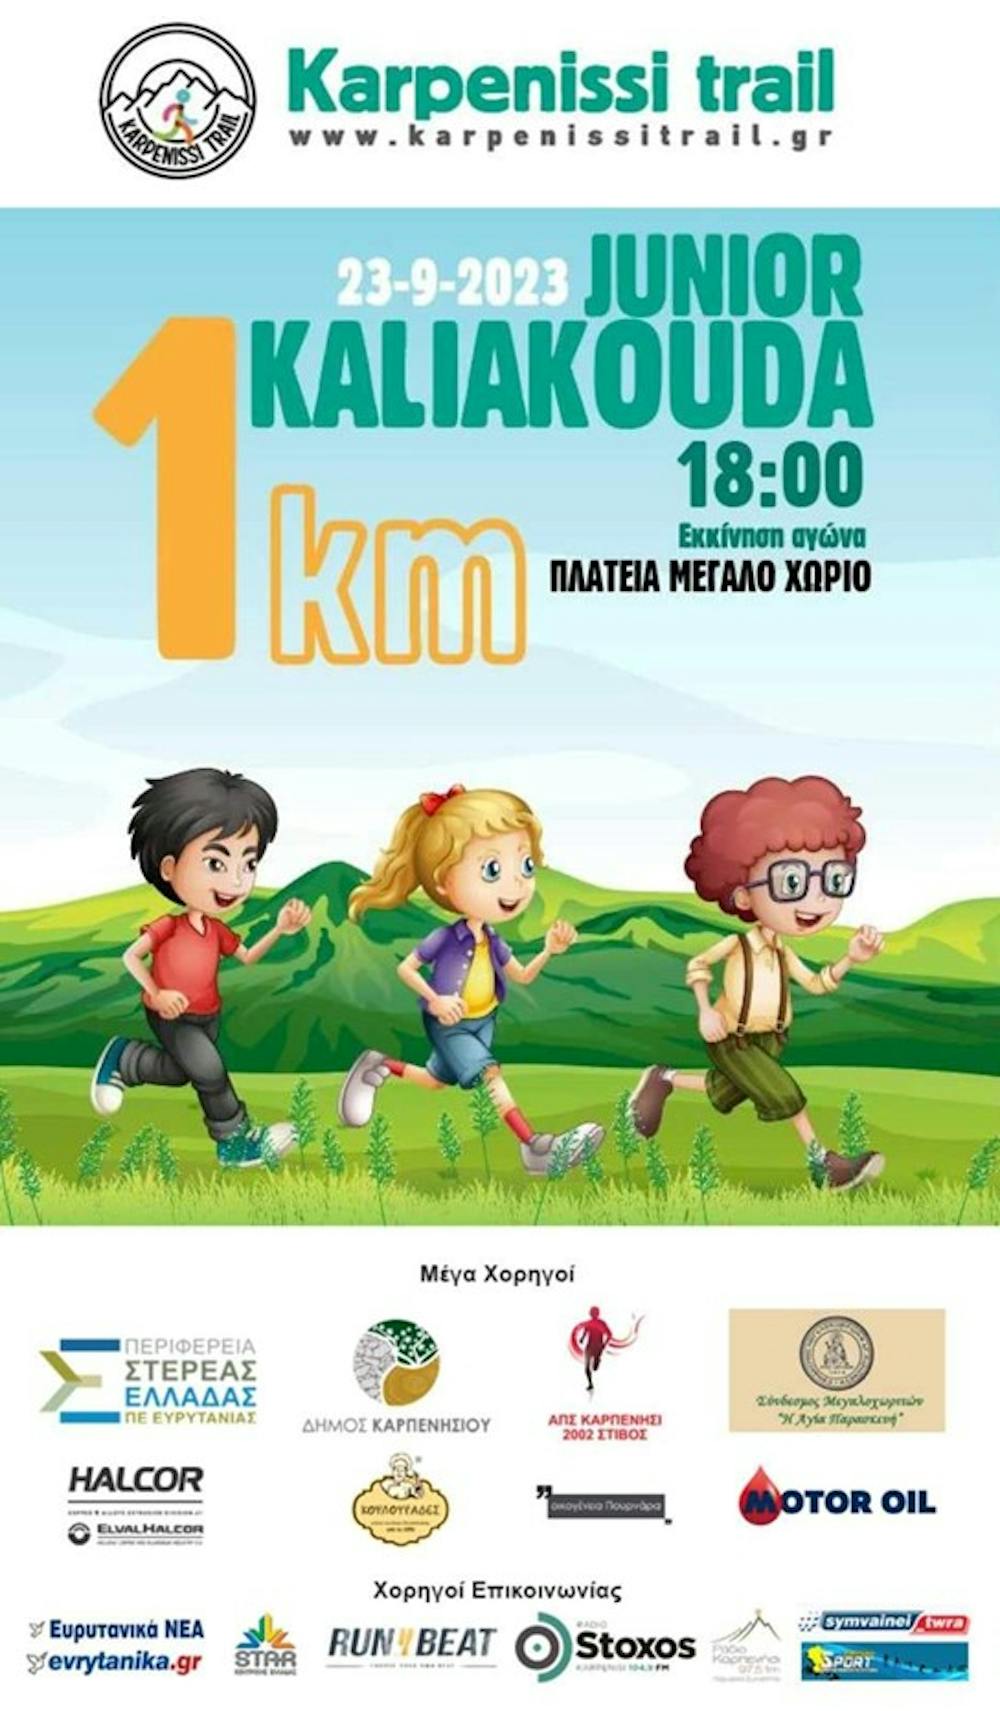 Karpenissi Trail: Αγώνες Ορεινού Τρεξίματος… και όχι μόνο! runbeat.gr 